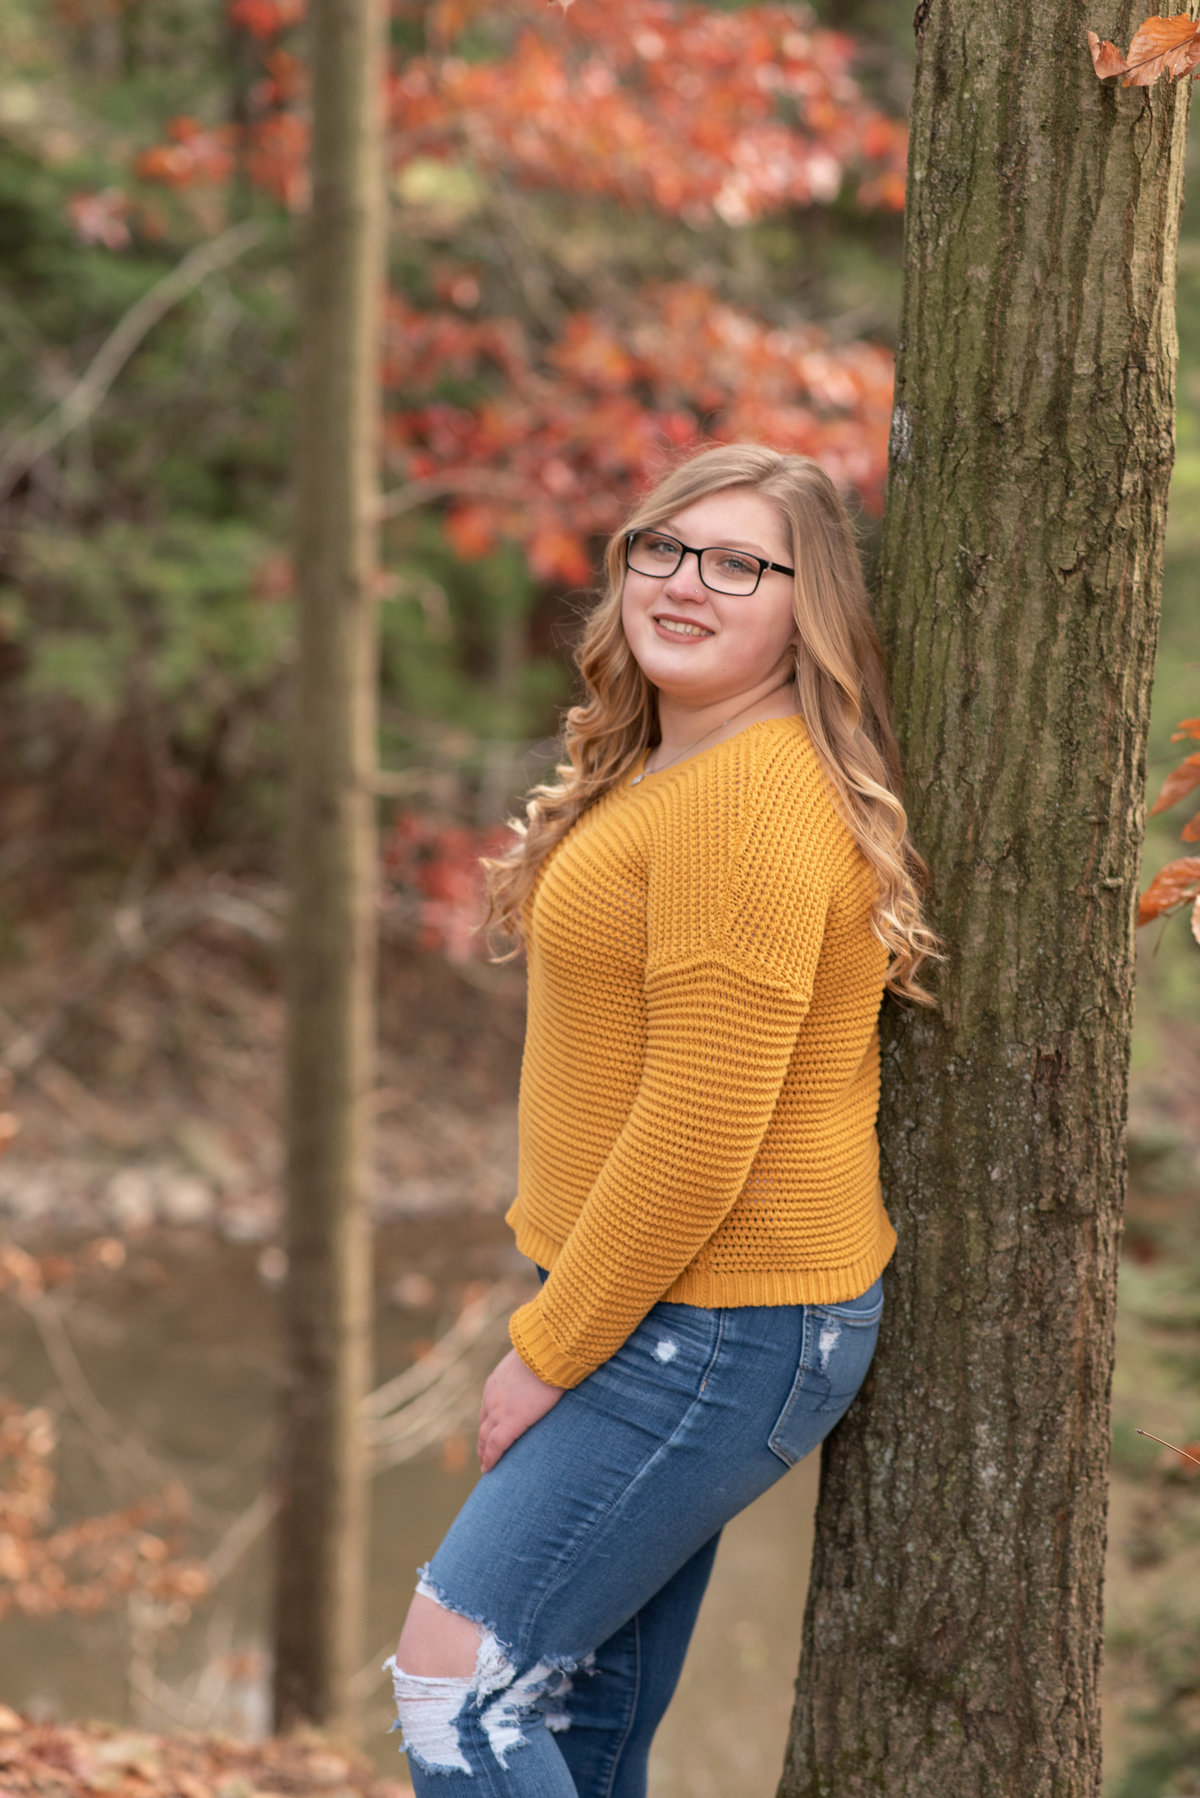 Senior Girl in gold sweater leaning against tree